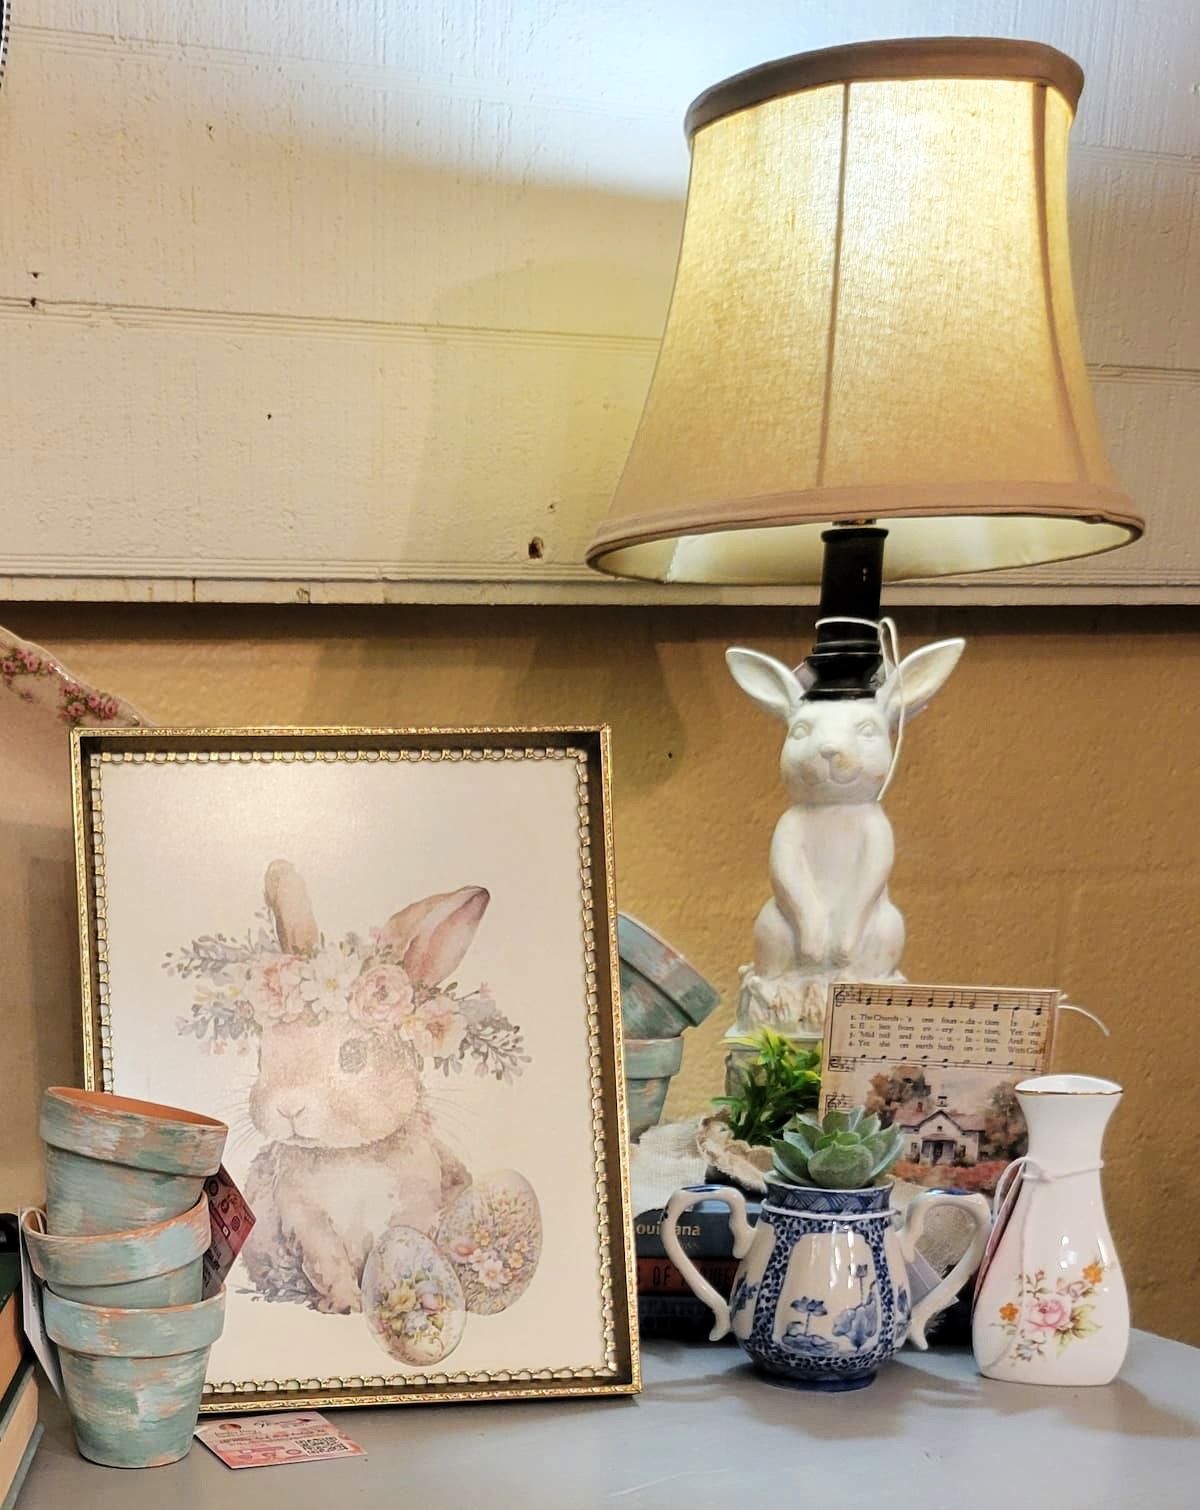 vignette with rabbit lamp